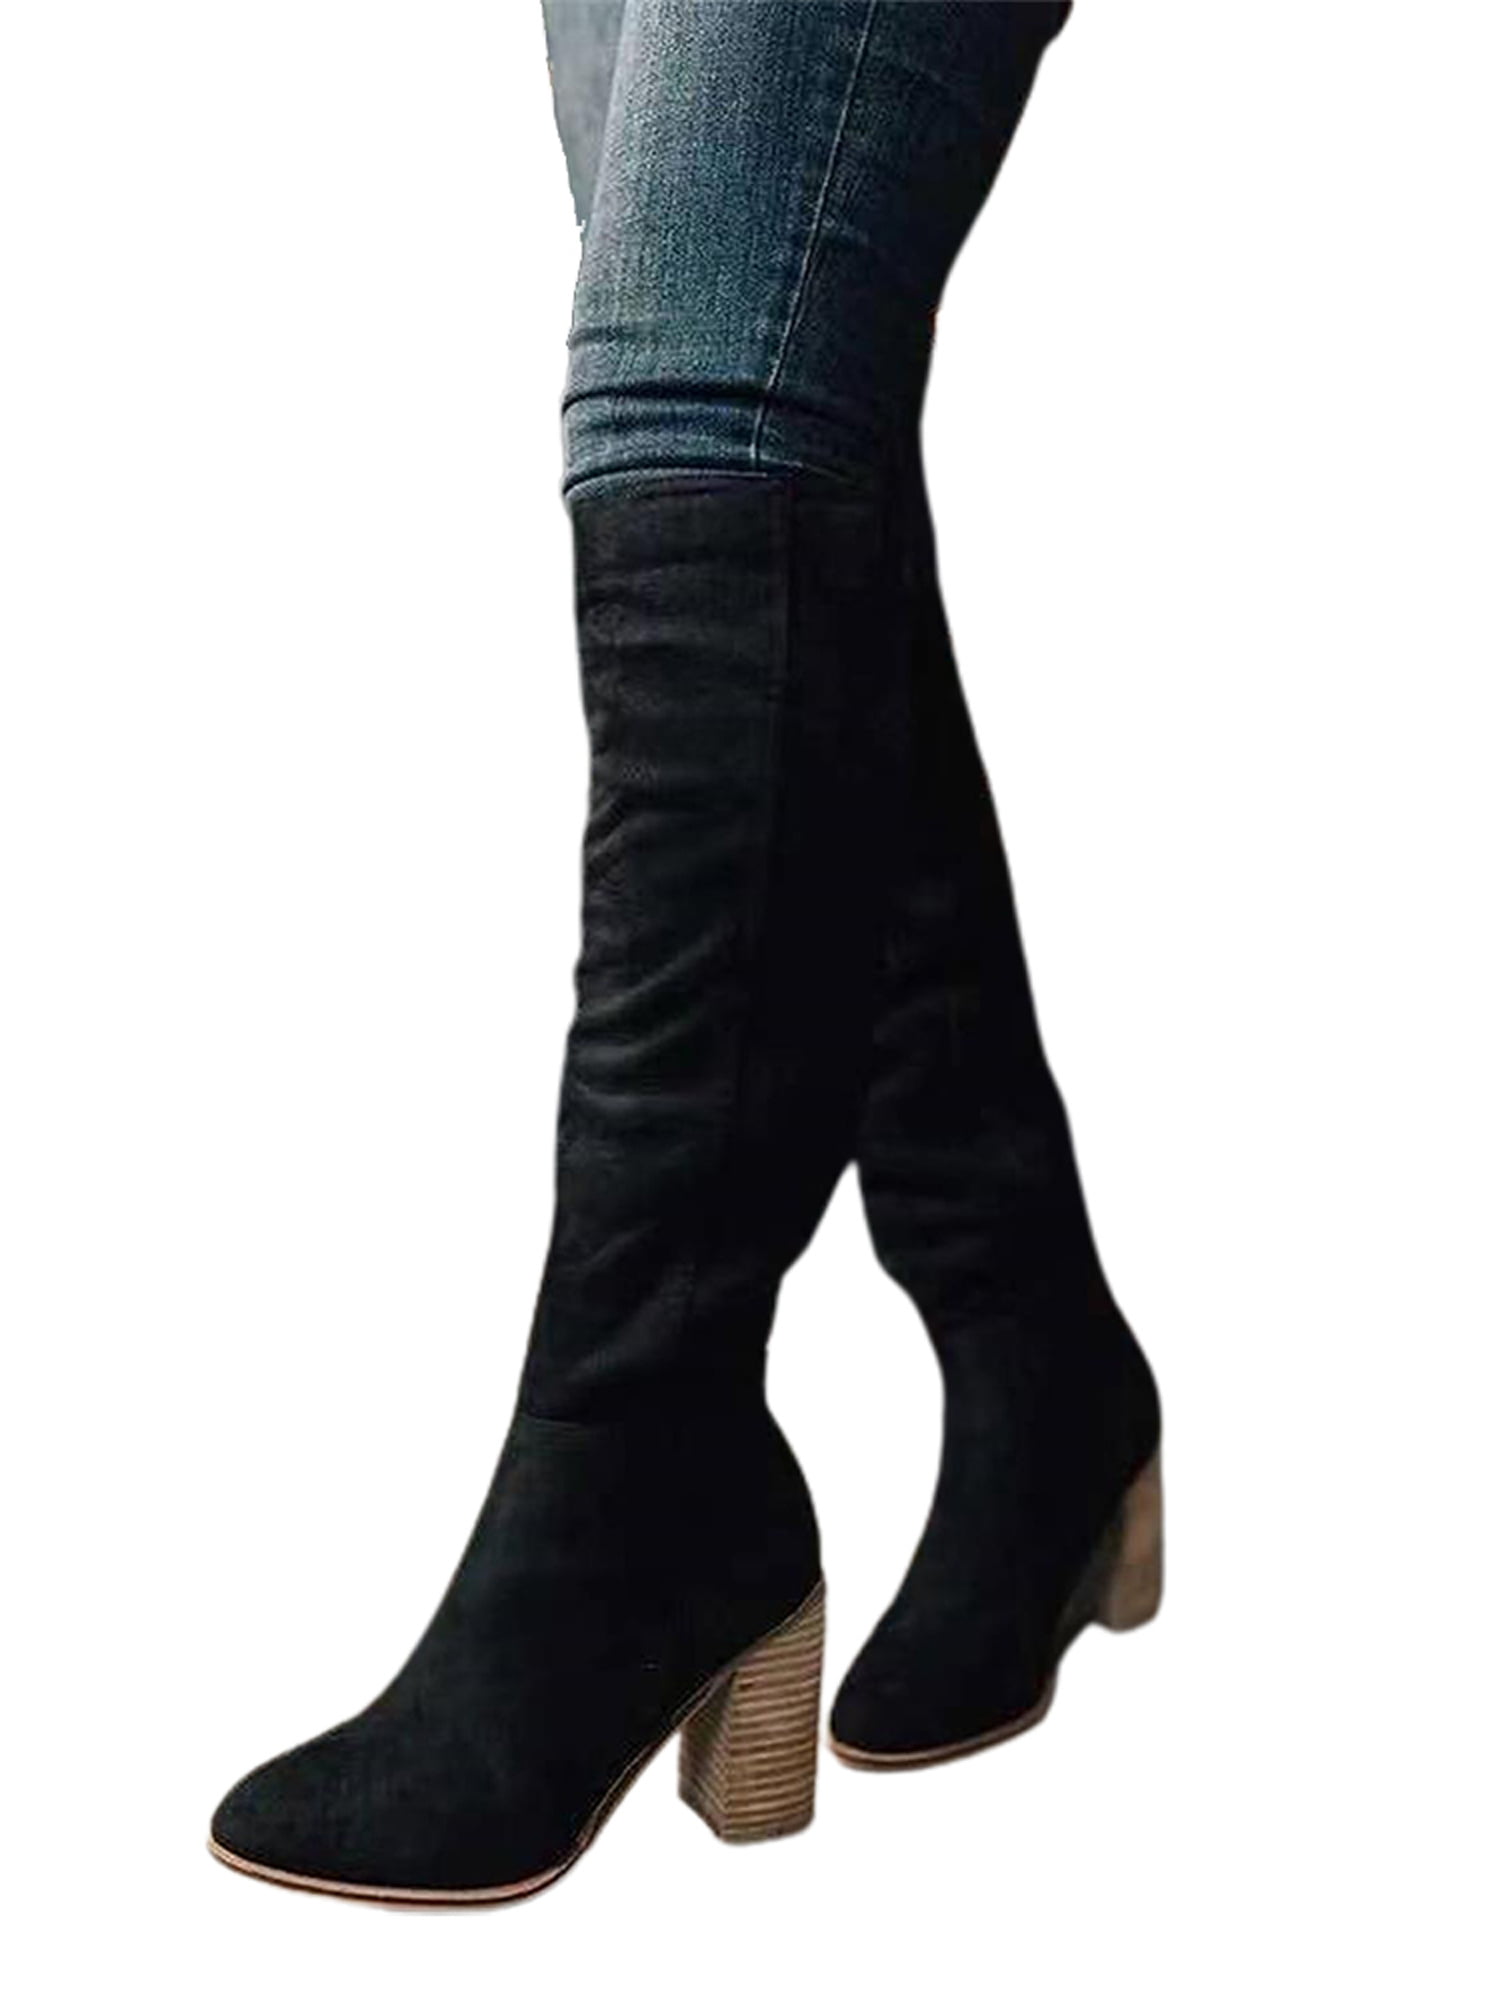 NEW Women's Thigh High block Heel Boots suede finish Ladies Girls size3-8 